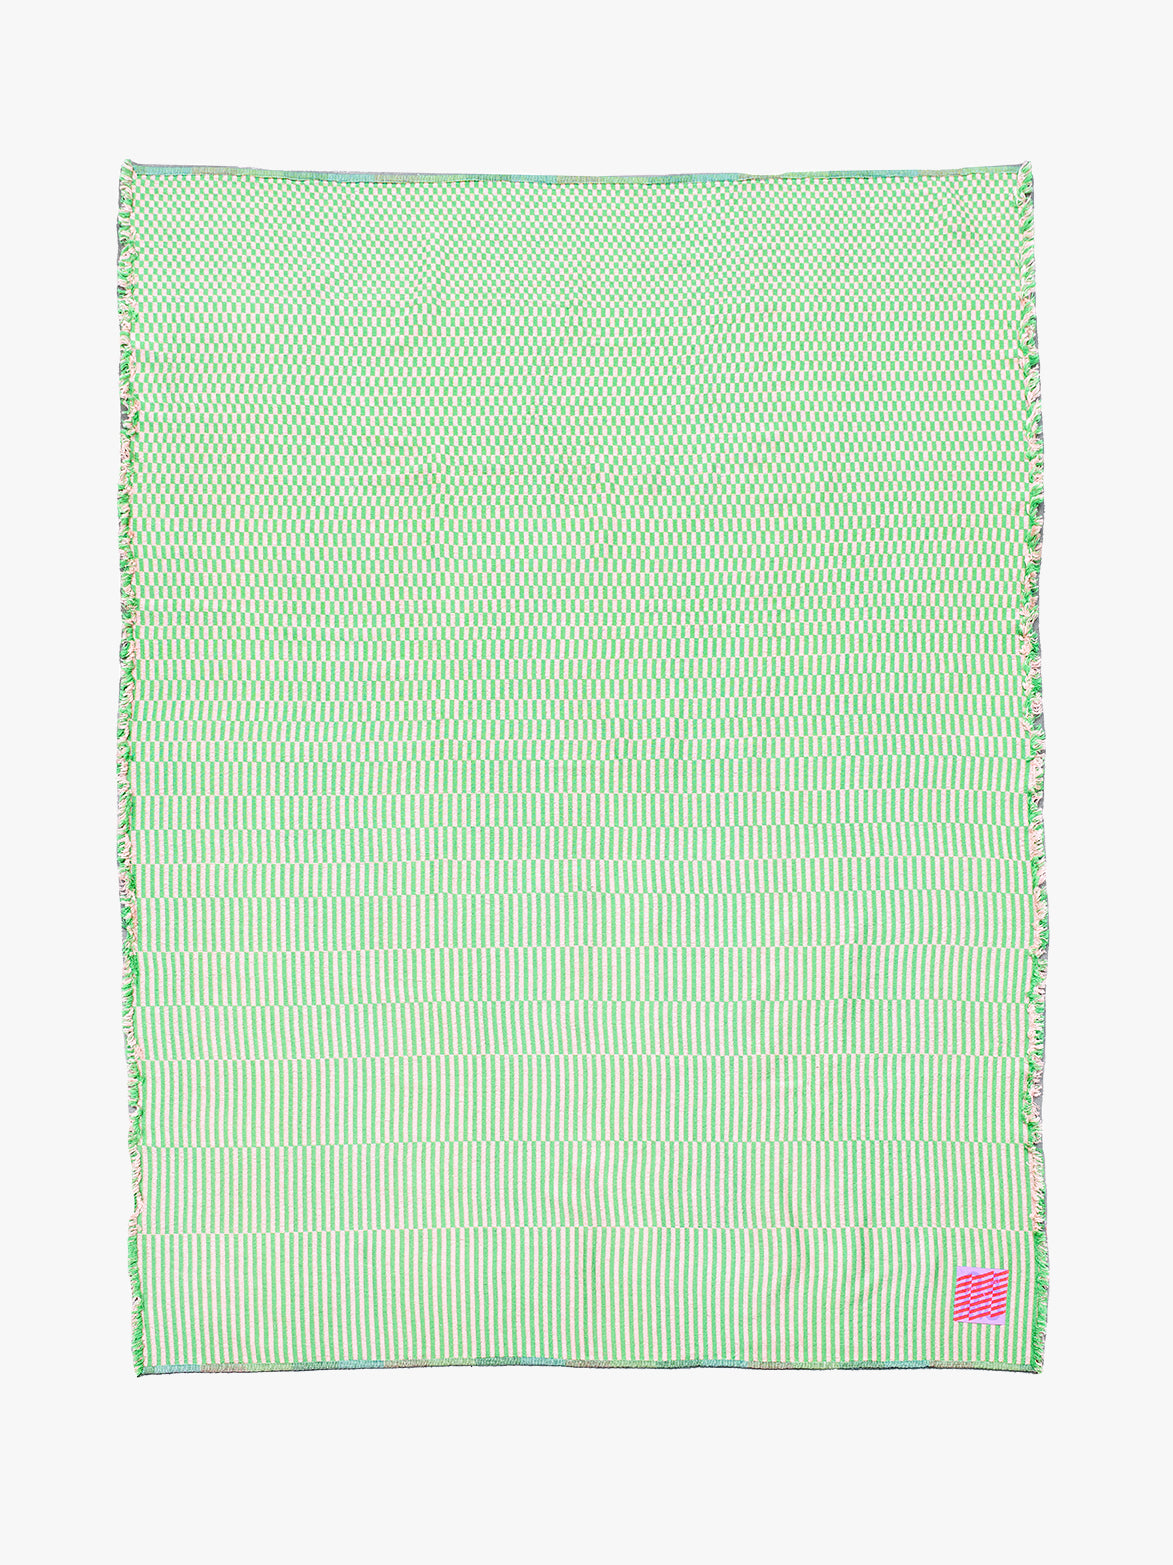 F Sequence Blanket in Watermelon Tourmaline